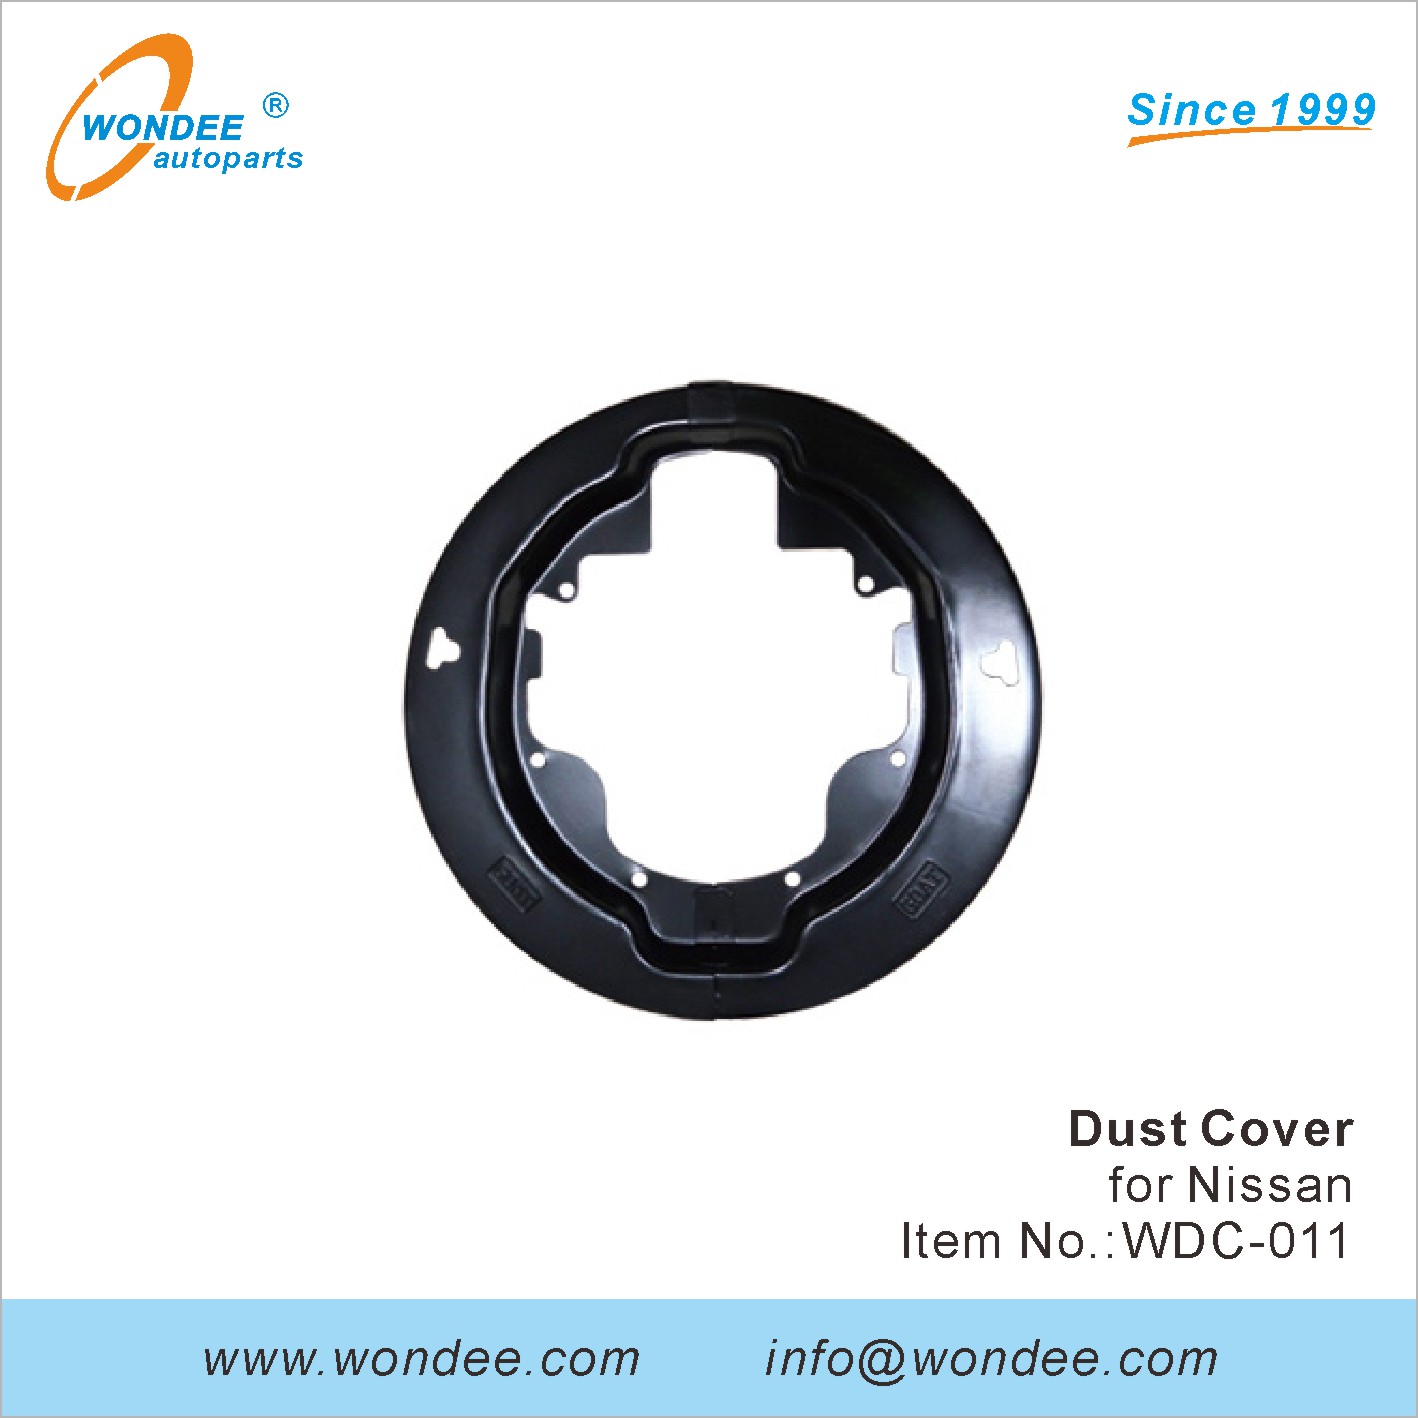 WONDEE dust cover (11)